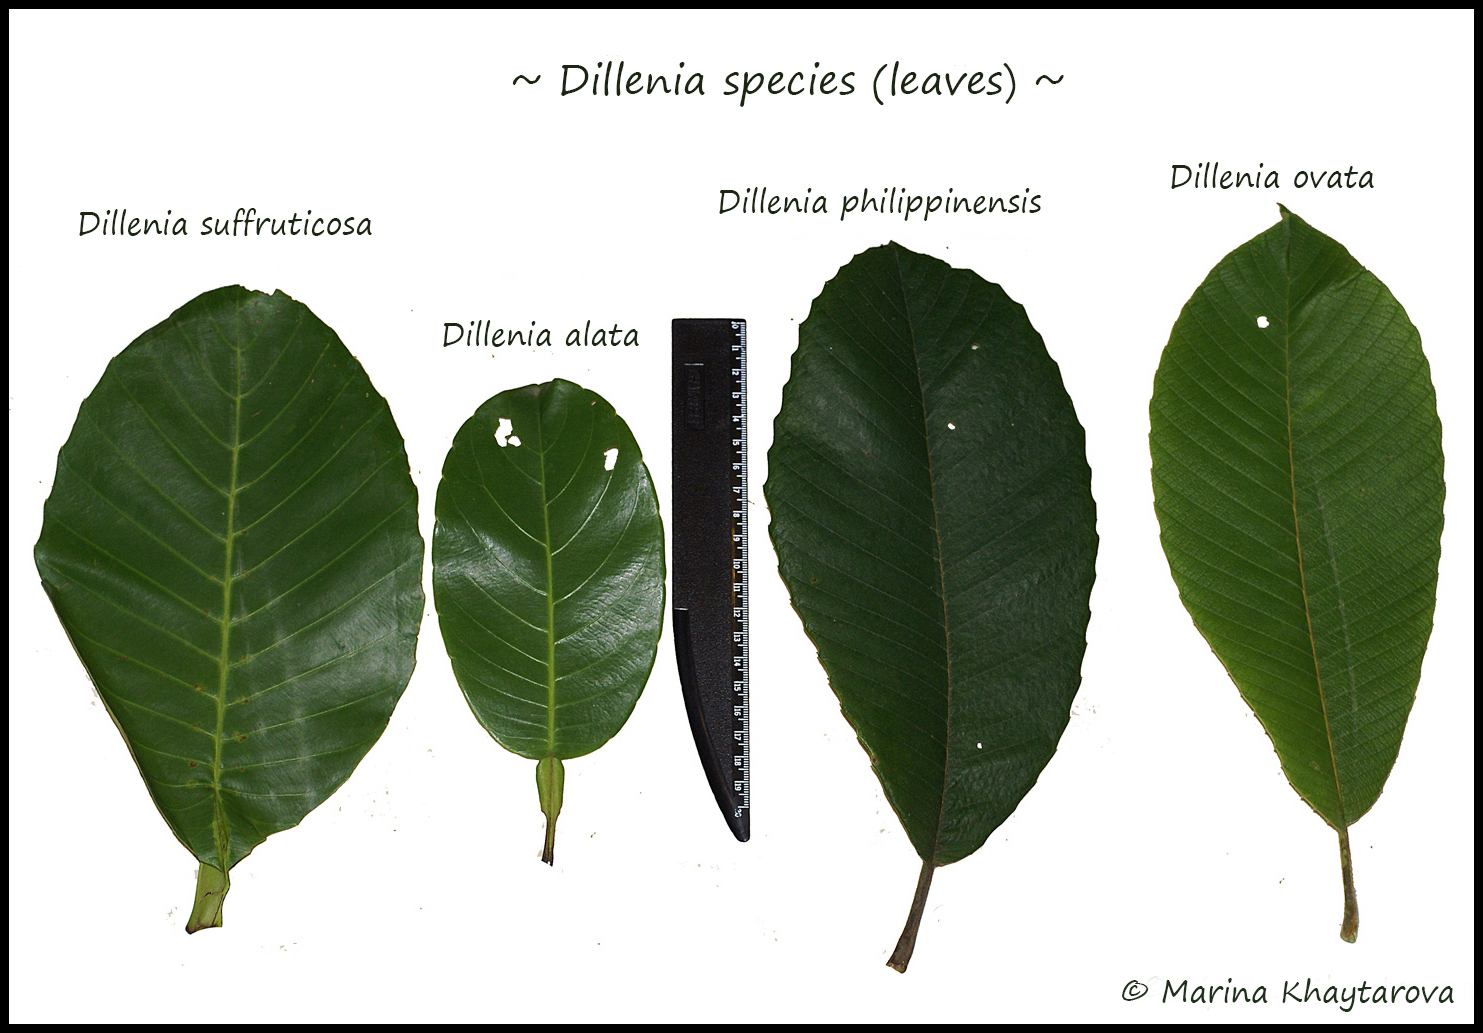 Dillenia species (leaves)